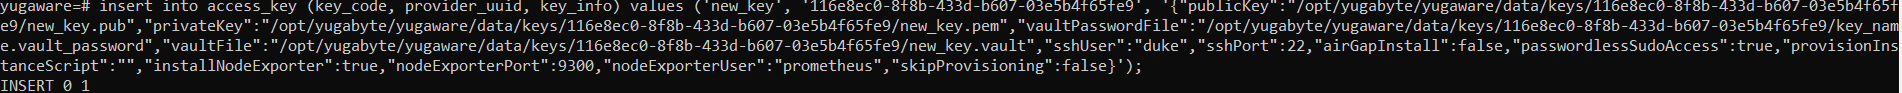 new_key_insert.png